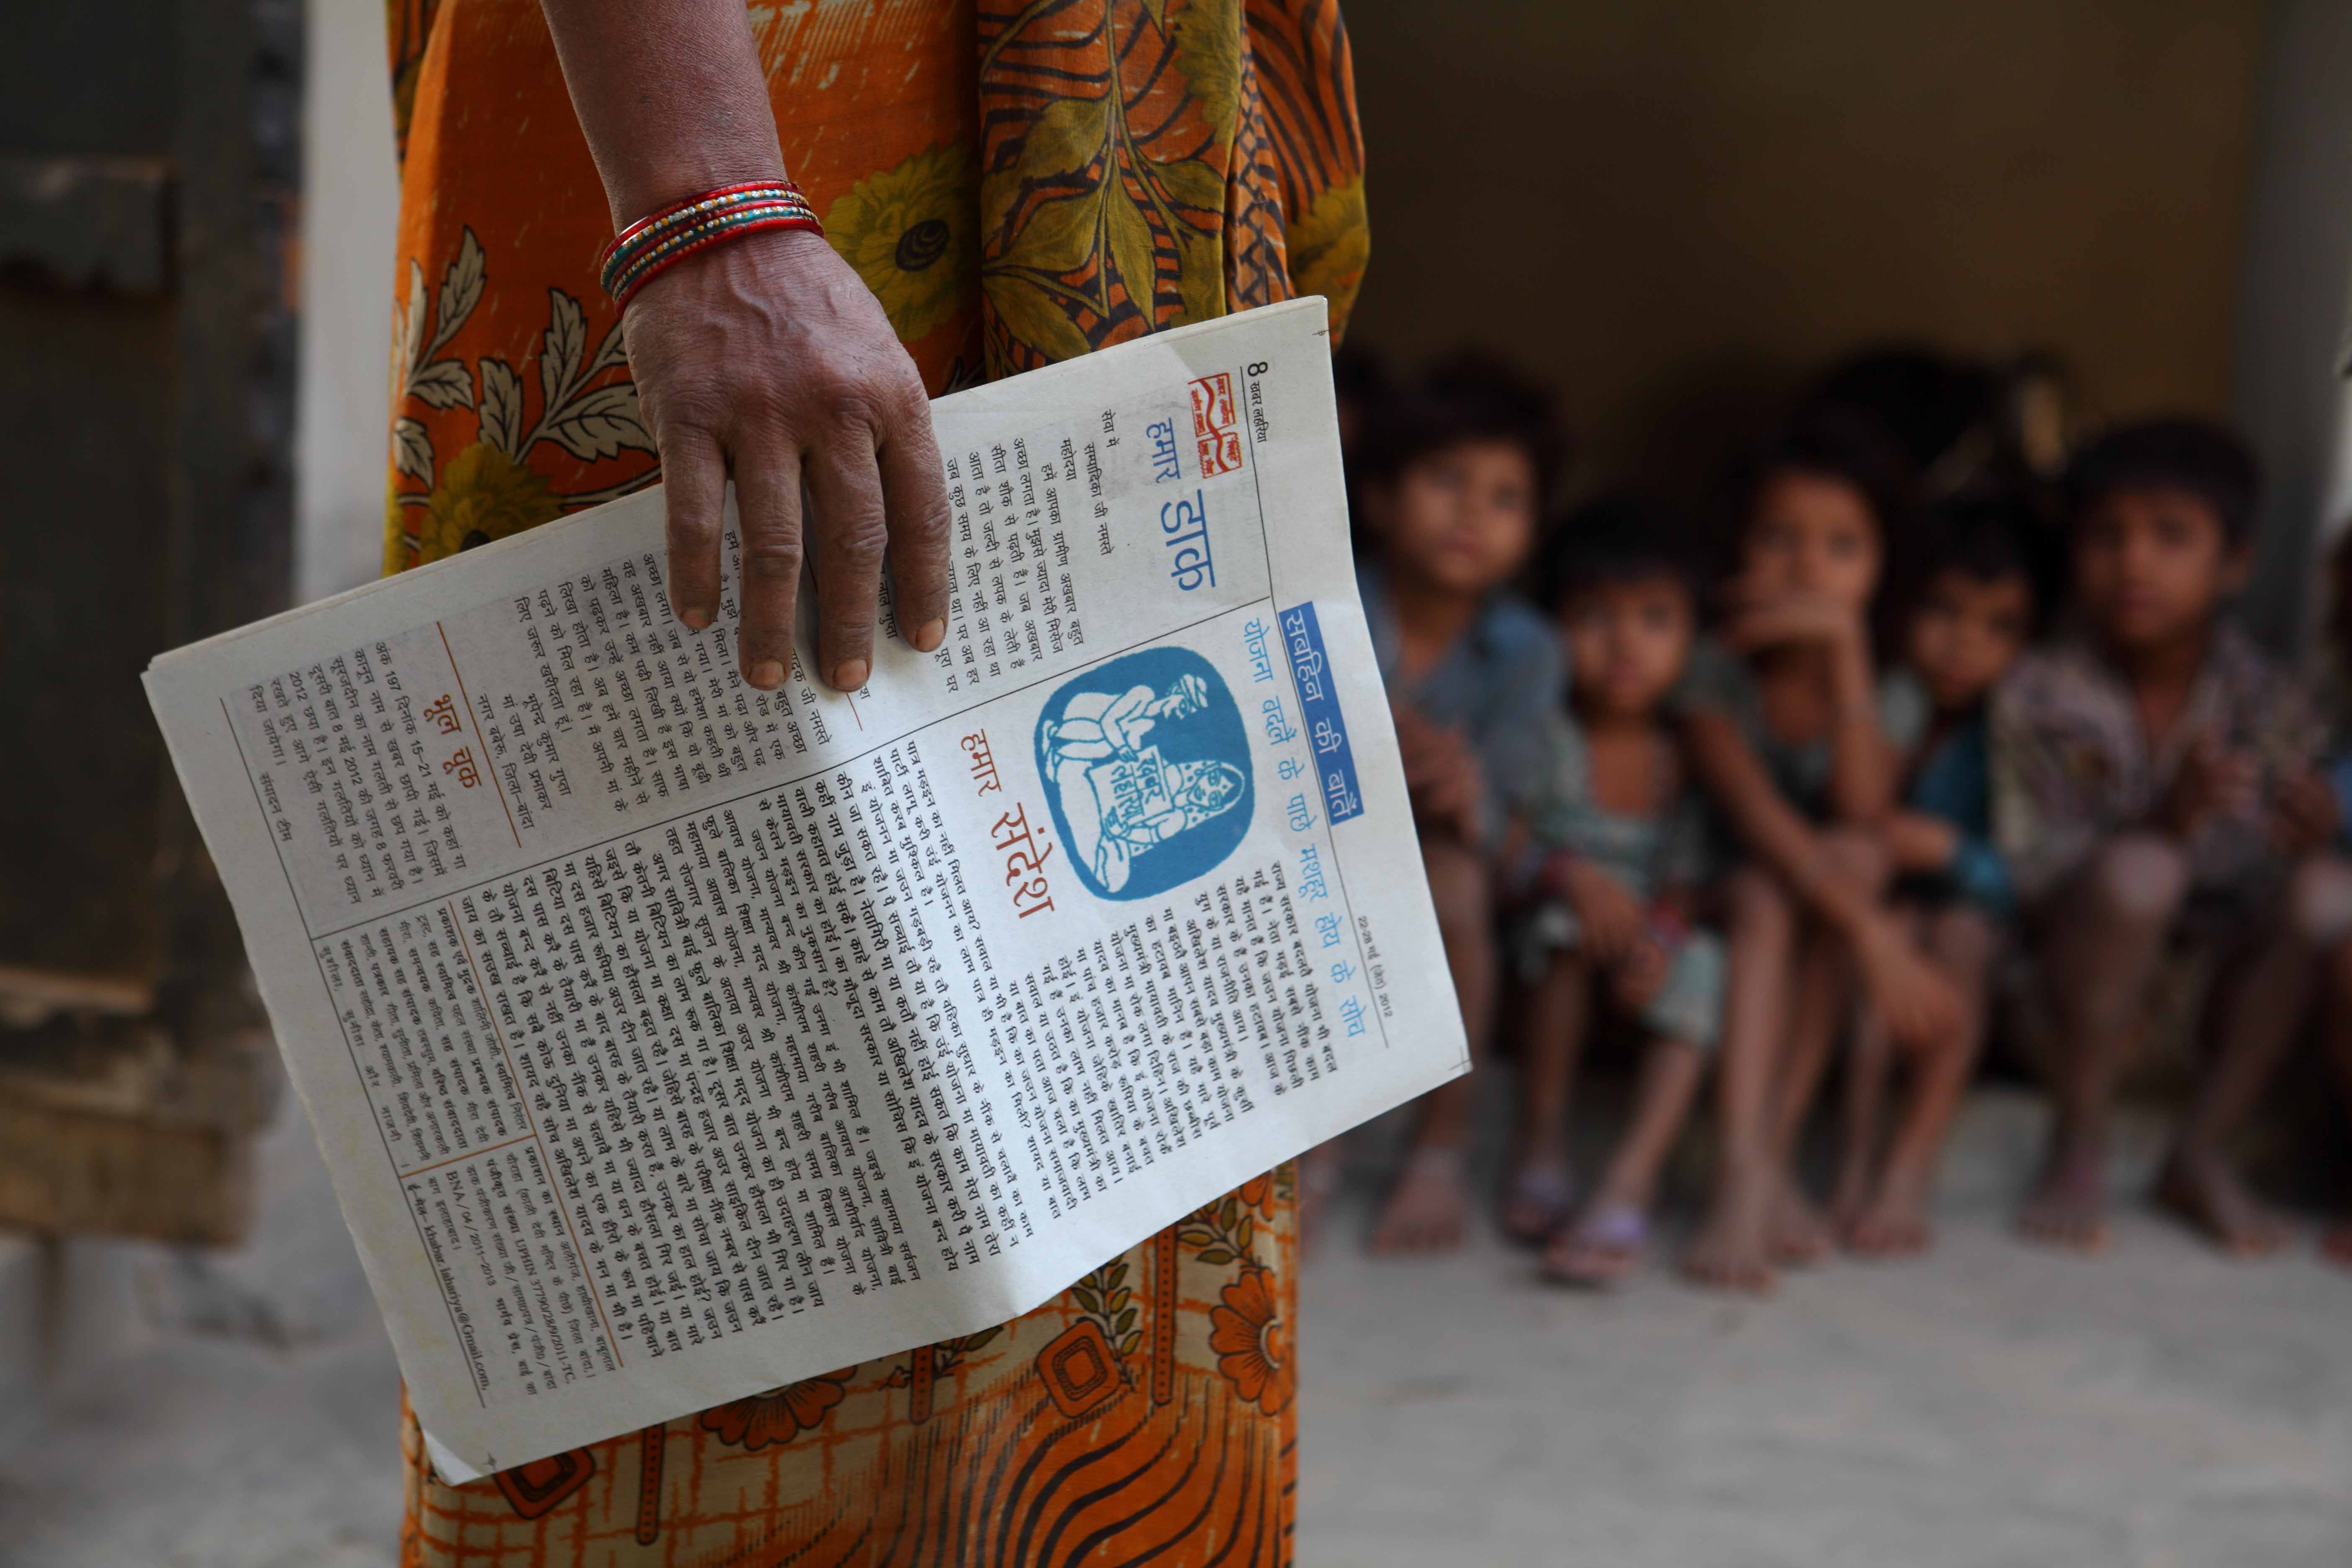 Khabar Lahariya are sold across 600 villages of Uttar Pradesh and Bihar, reaching a readership of 80,000